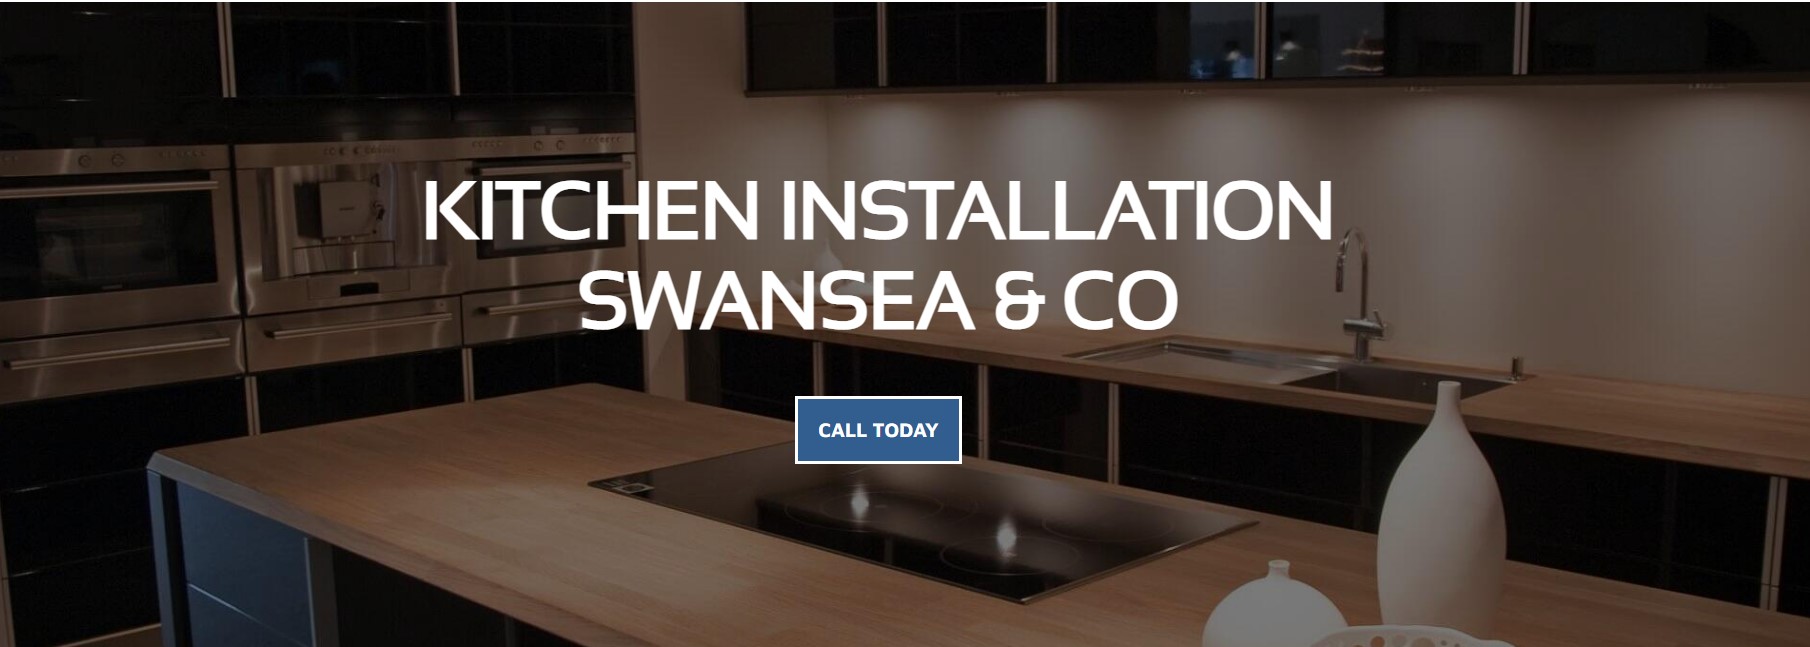 Kitchen Installation Swansea & Co